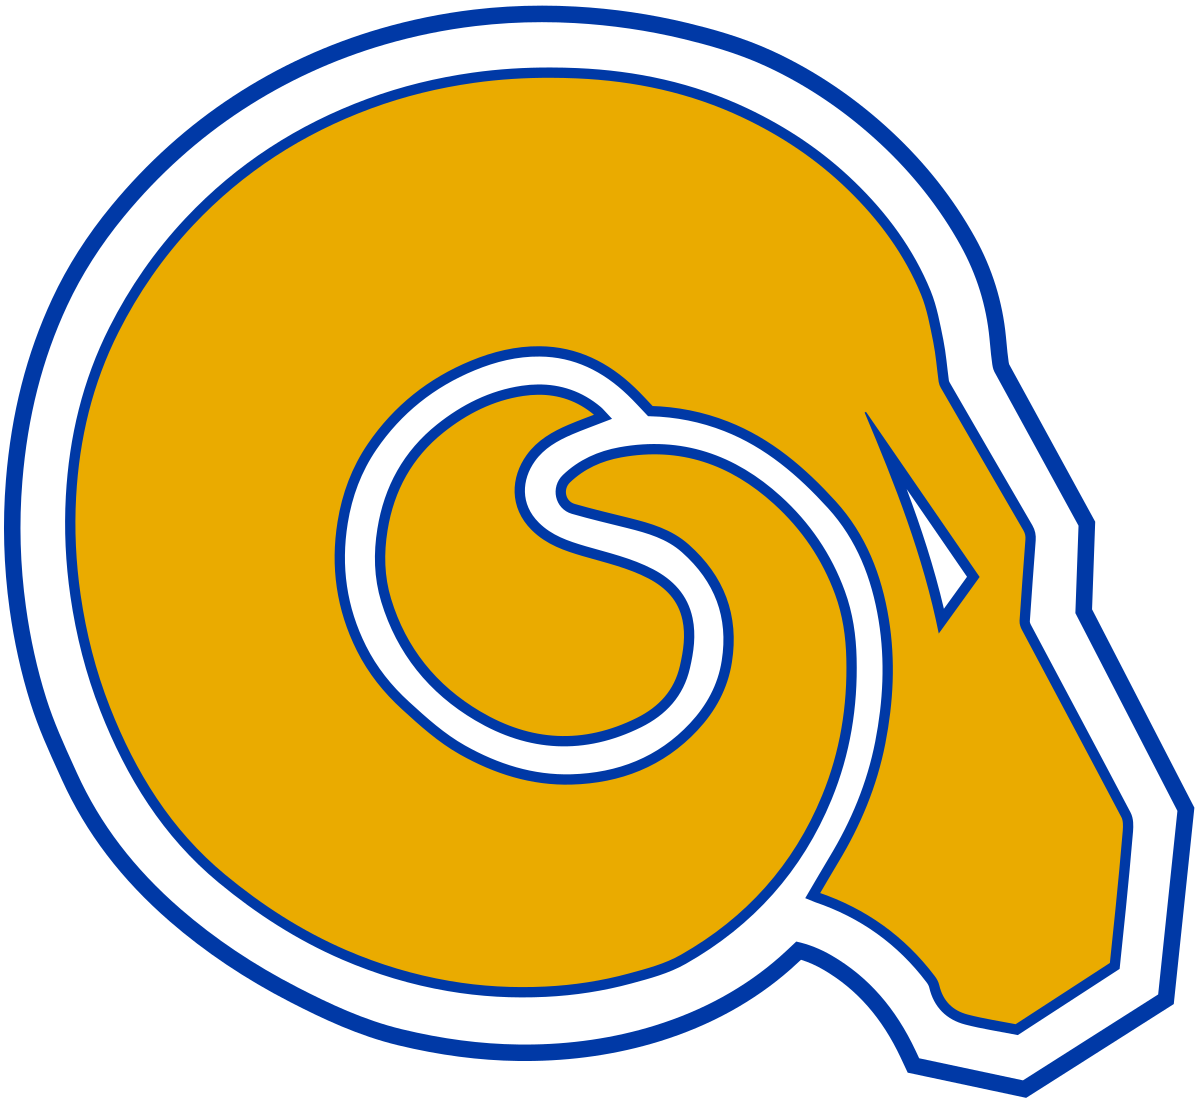 Albany State Golden Rams logo.svg